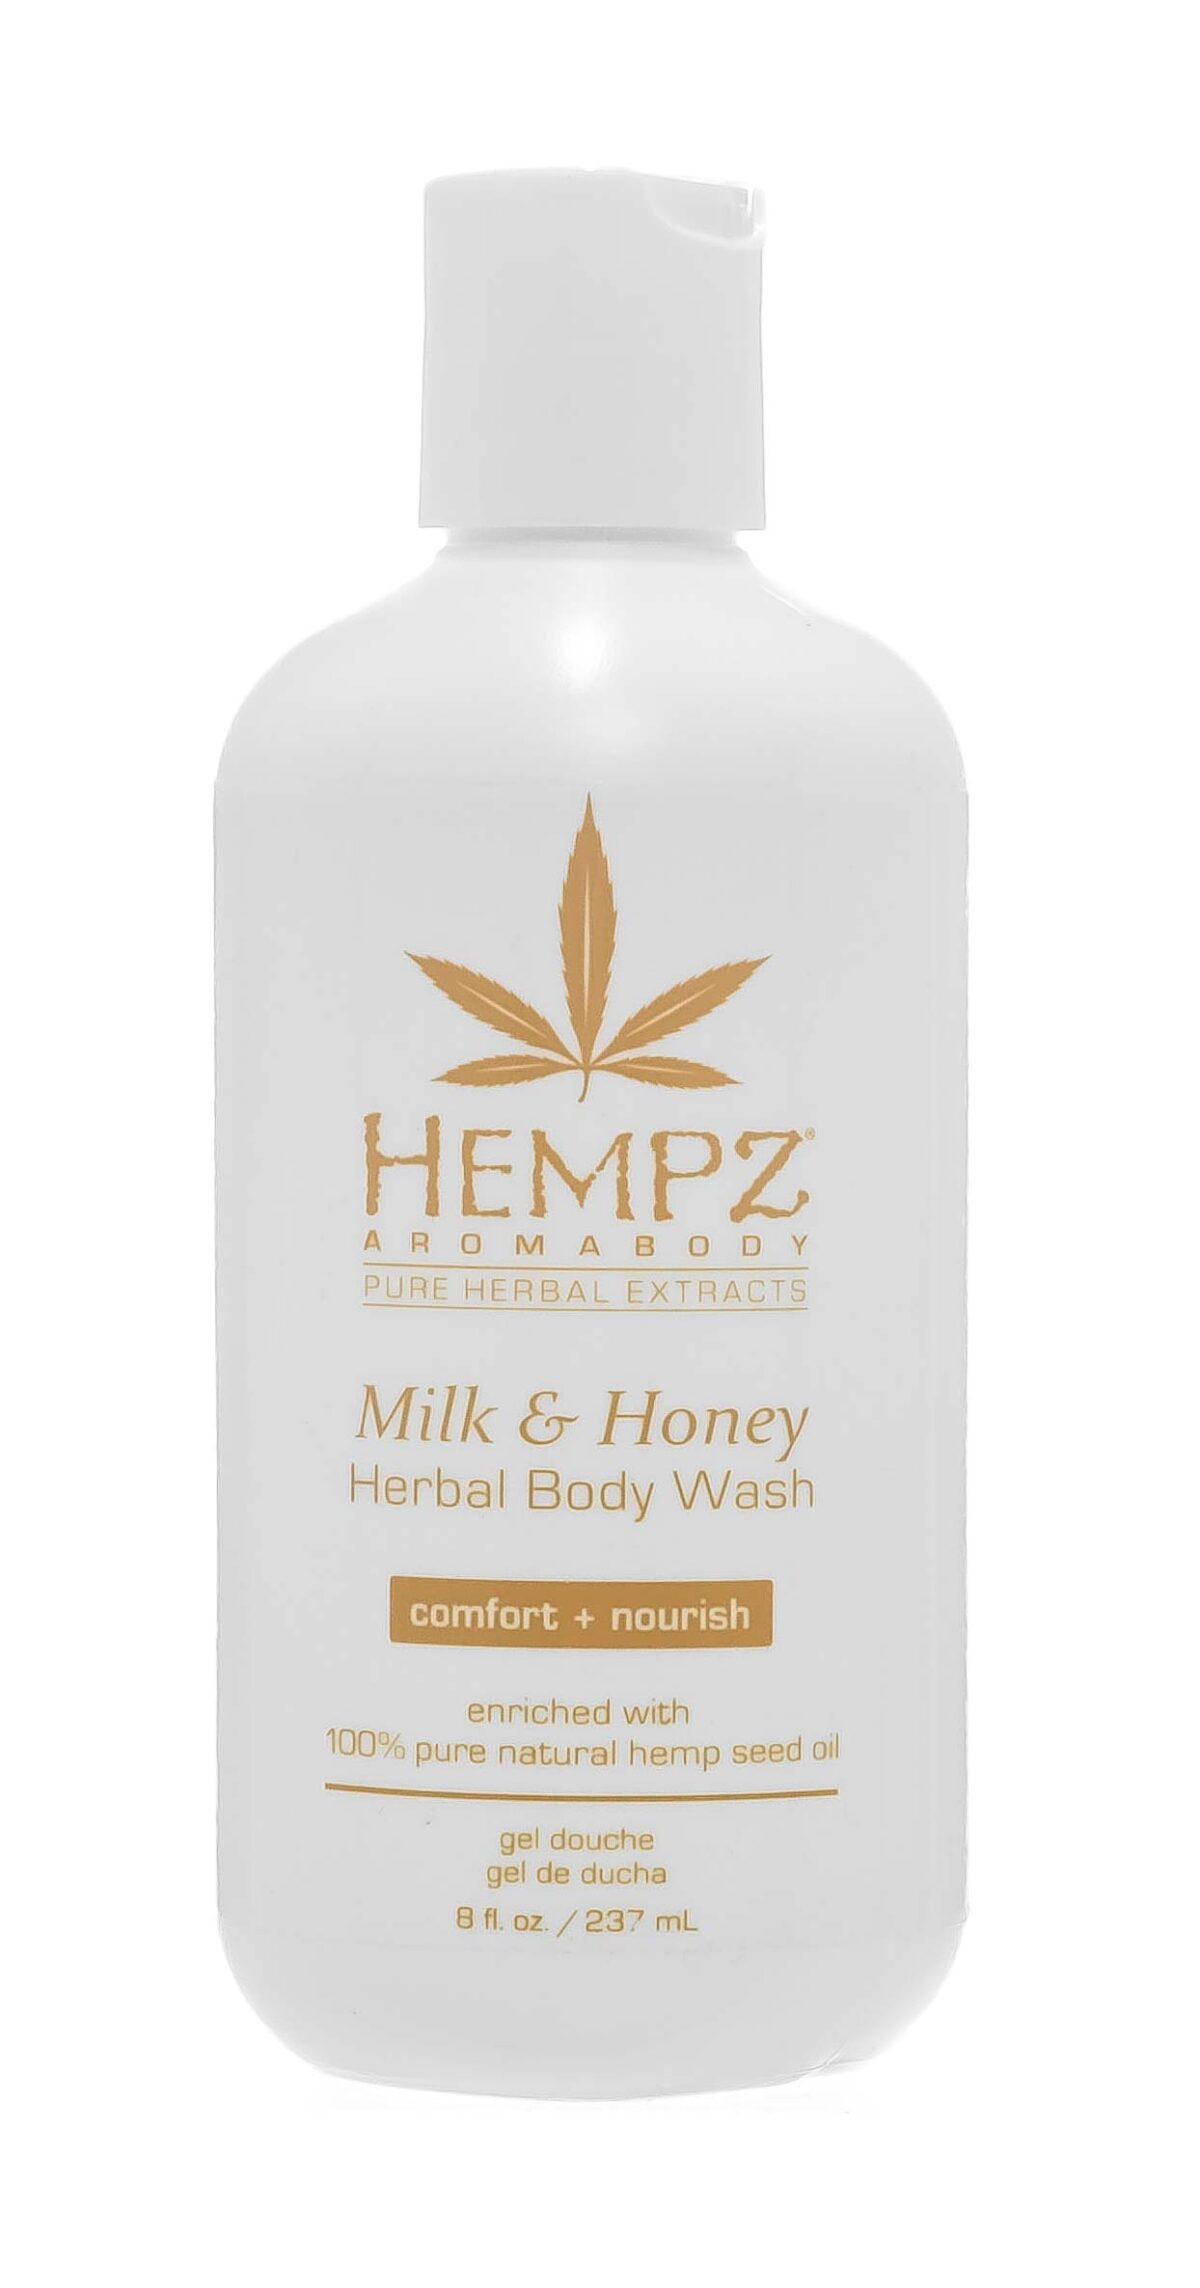 Гель для душа Milk & Honey Herbal Body Wash, 237 мл HEMPZ